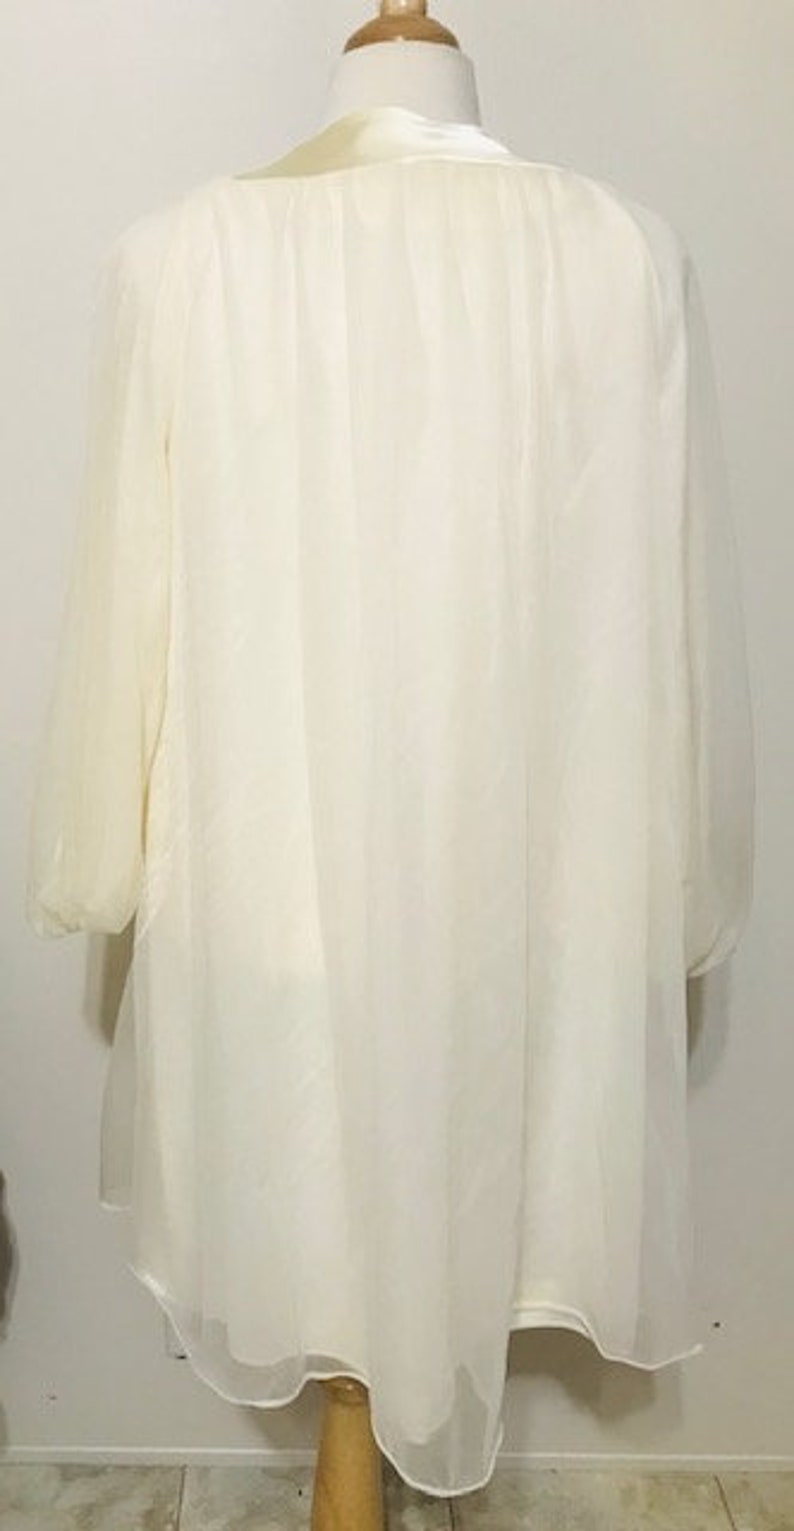 Gossard Artemis Peignoir 1960's Nightgown and Robe Set | Etsy